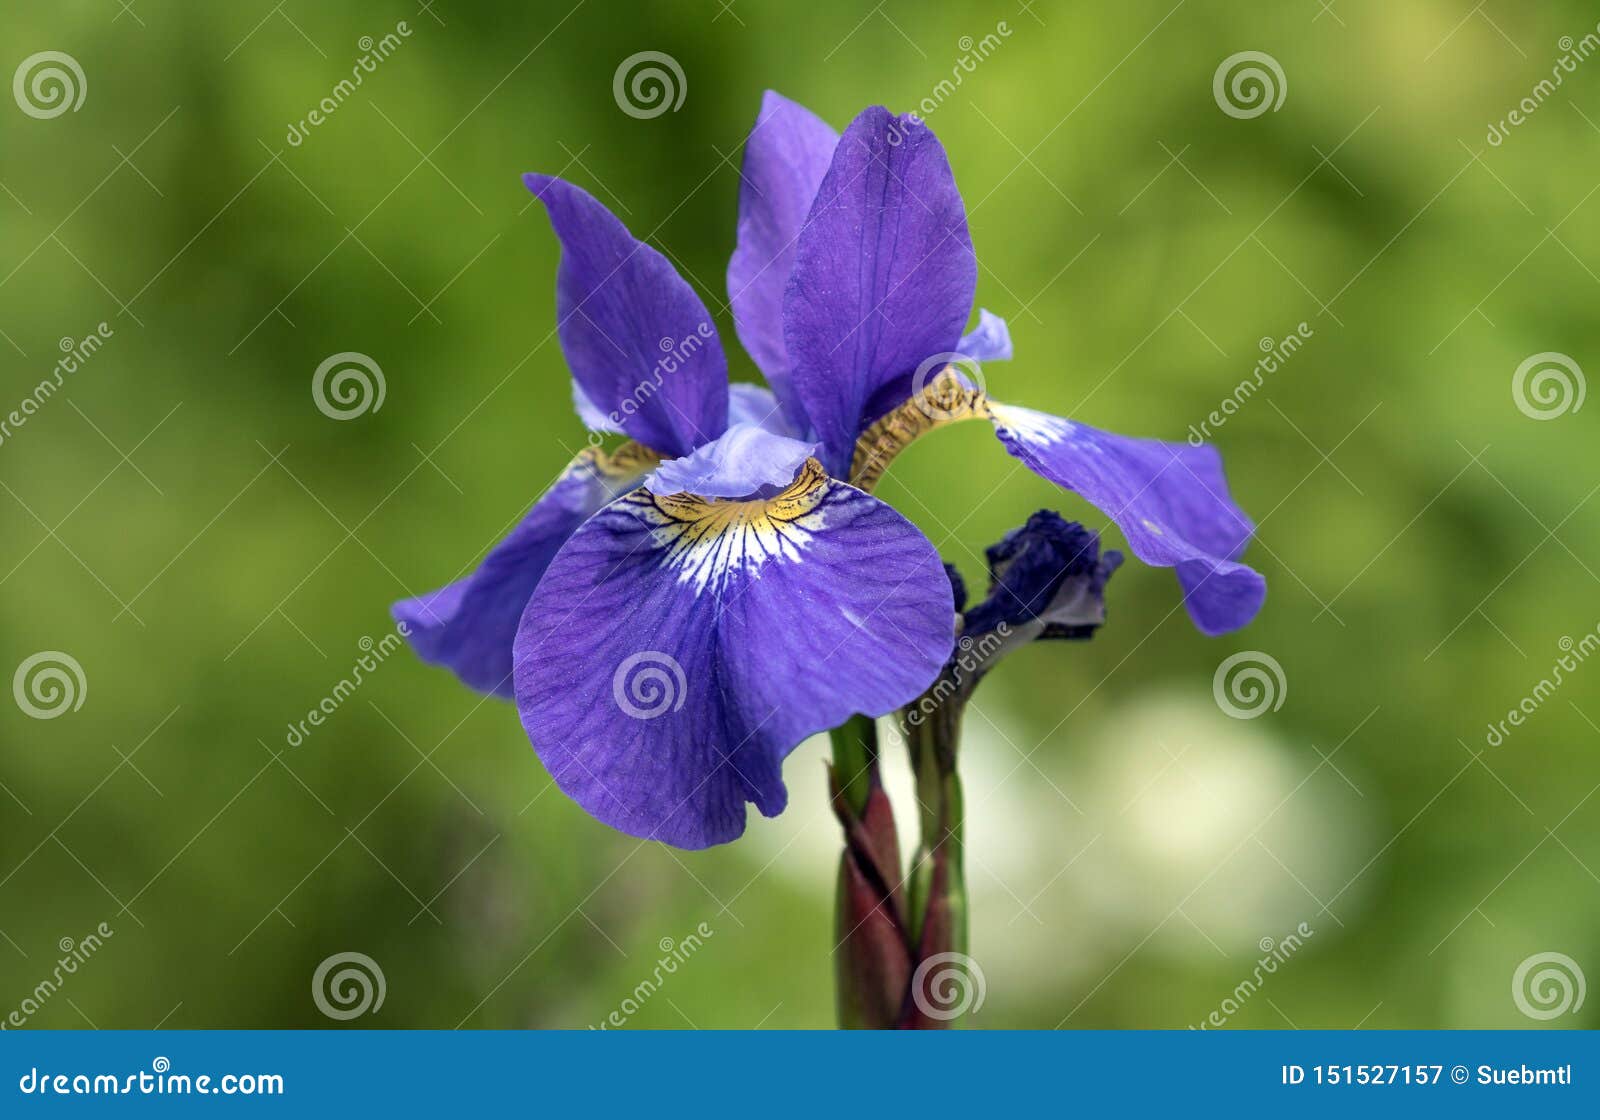 18,18 Iris Flower Closeup Photos   Free & Royalty Free Stock ...